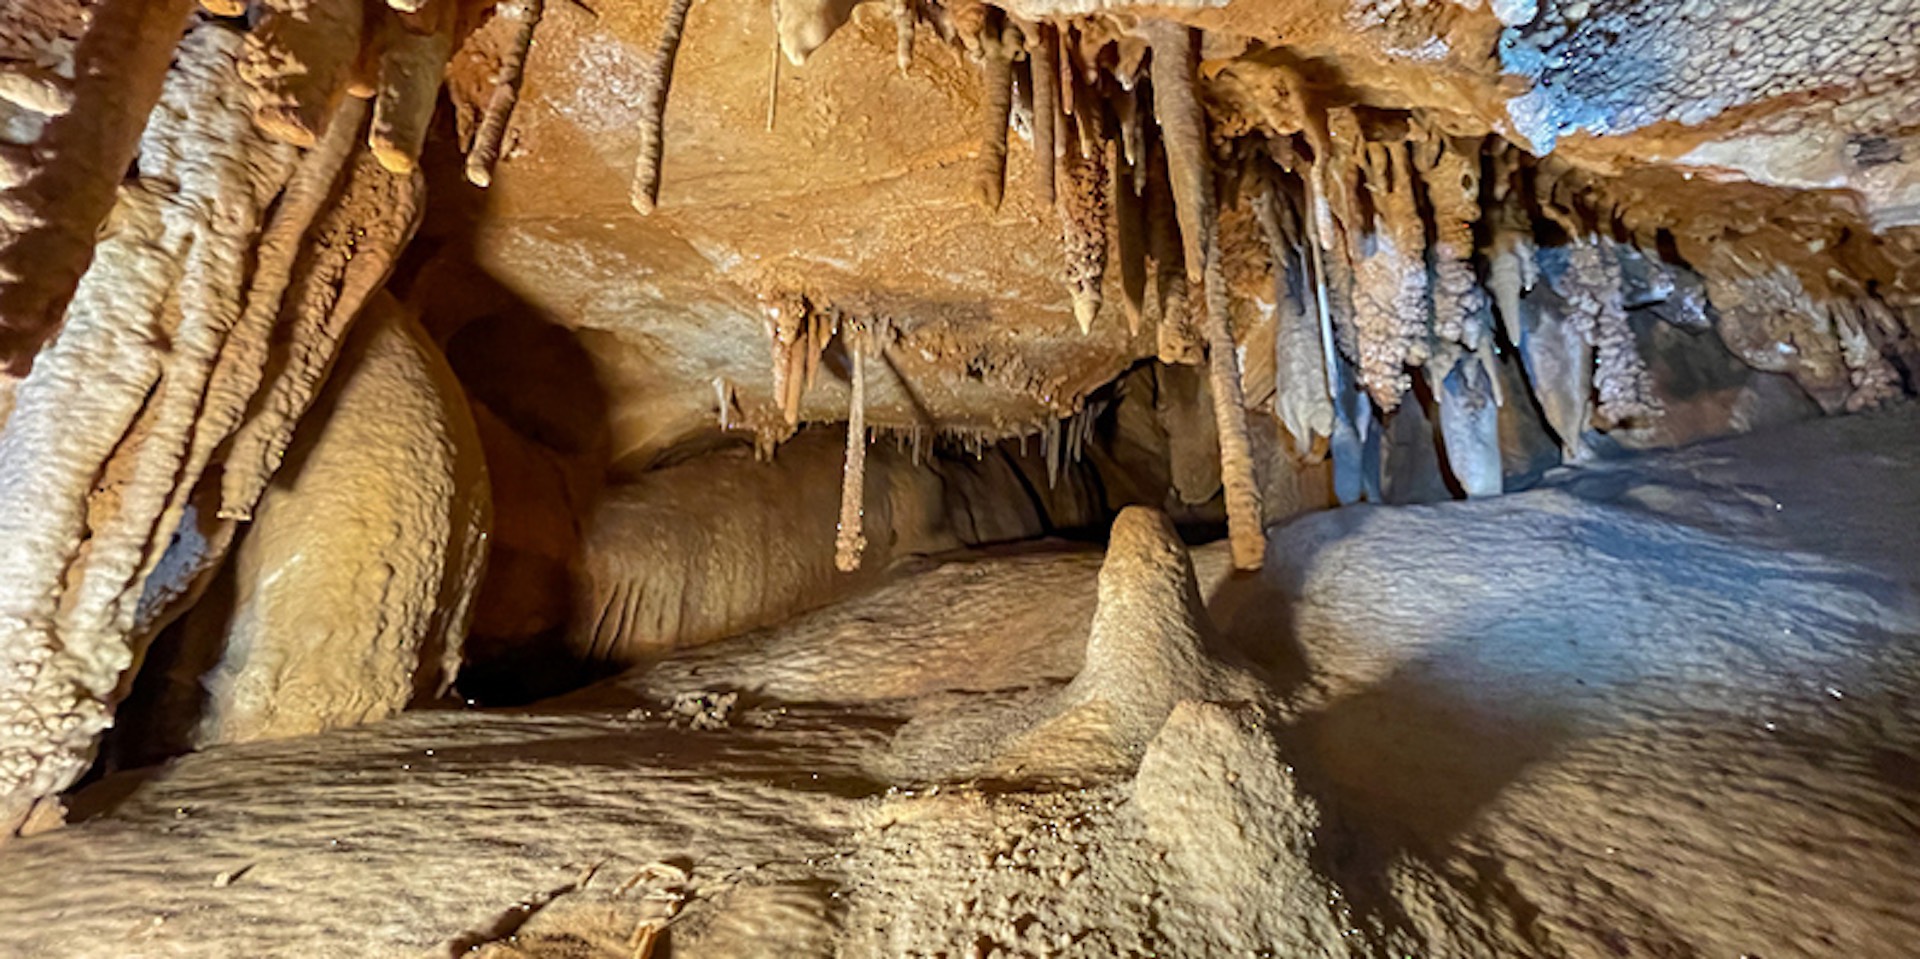 Omani cave exploration team documents a cave in Al Jabal Al Akhdar